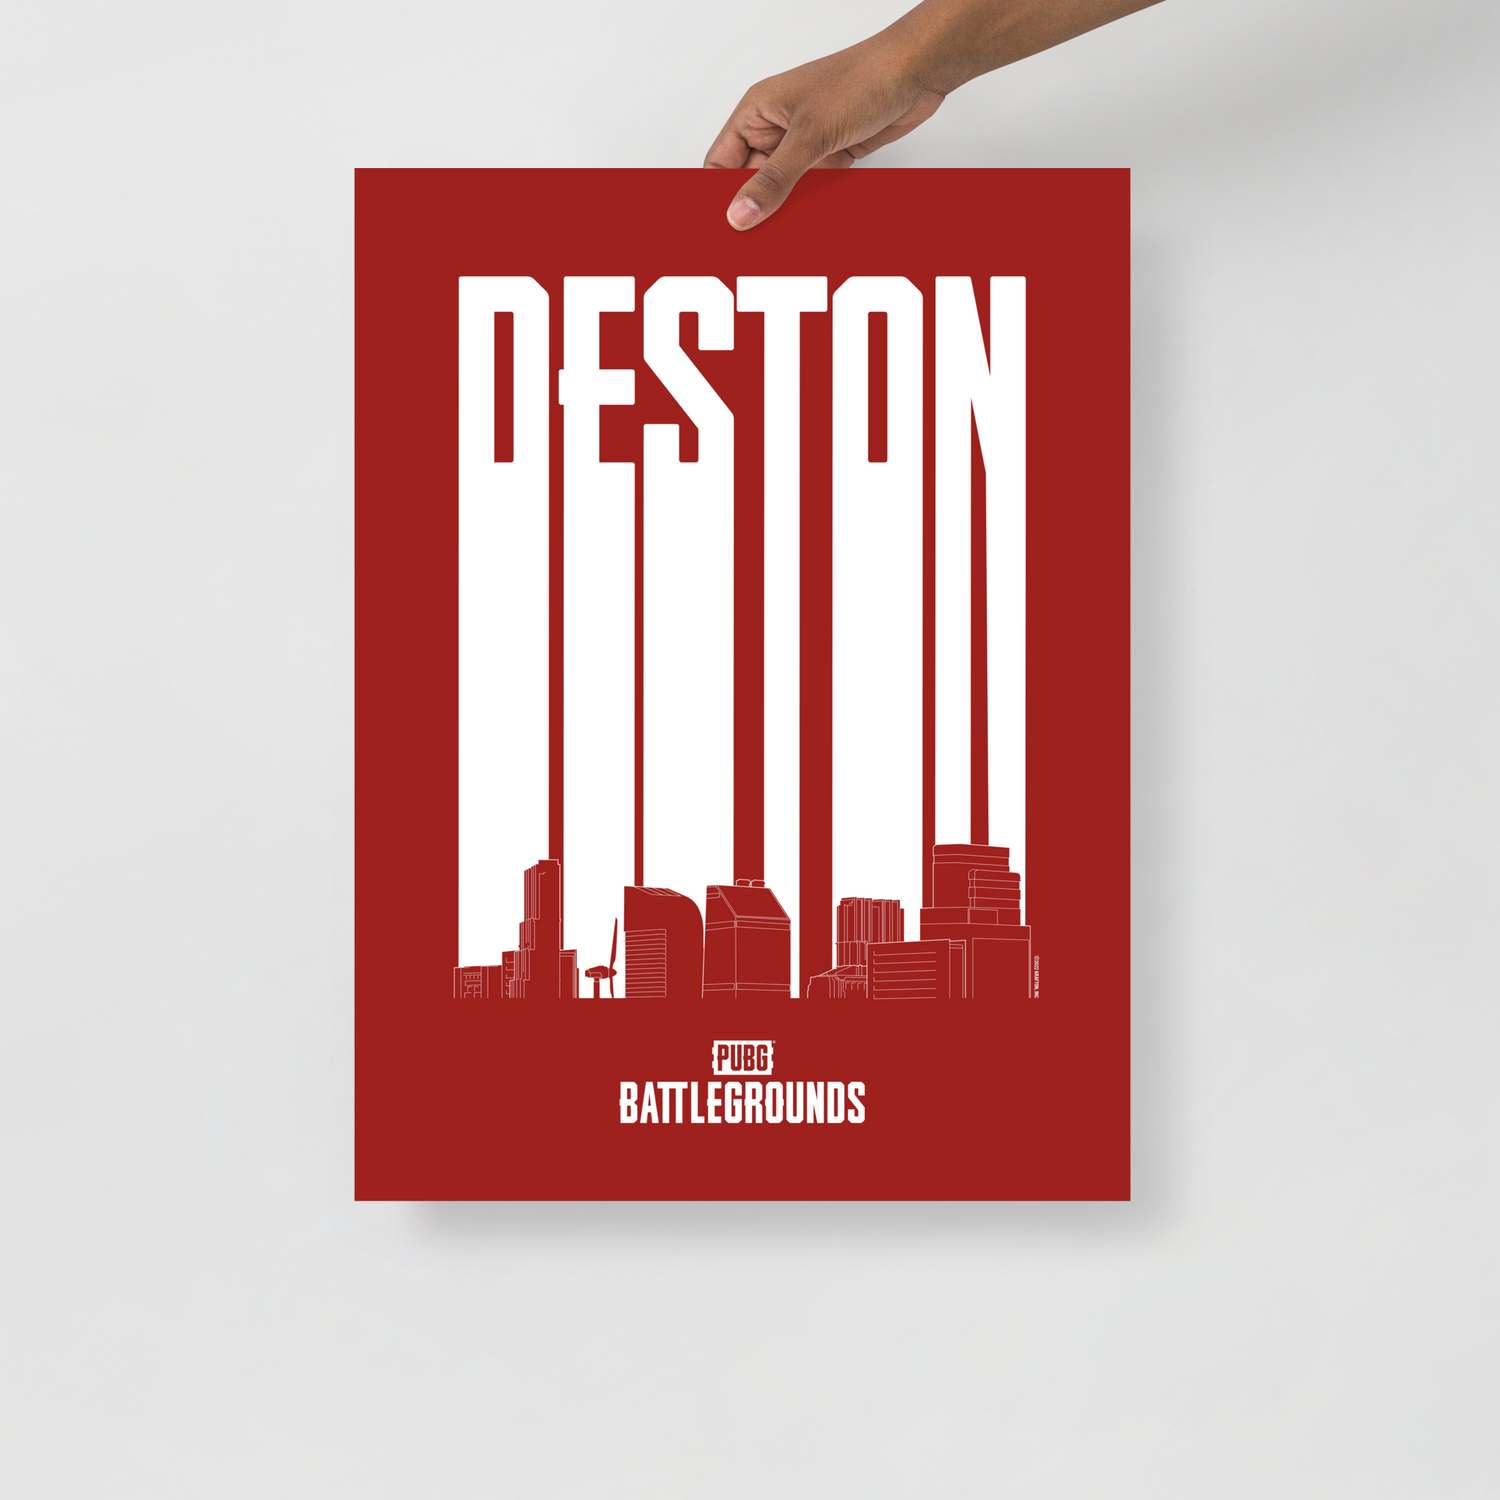 Deston Word Print